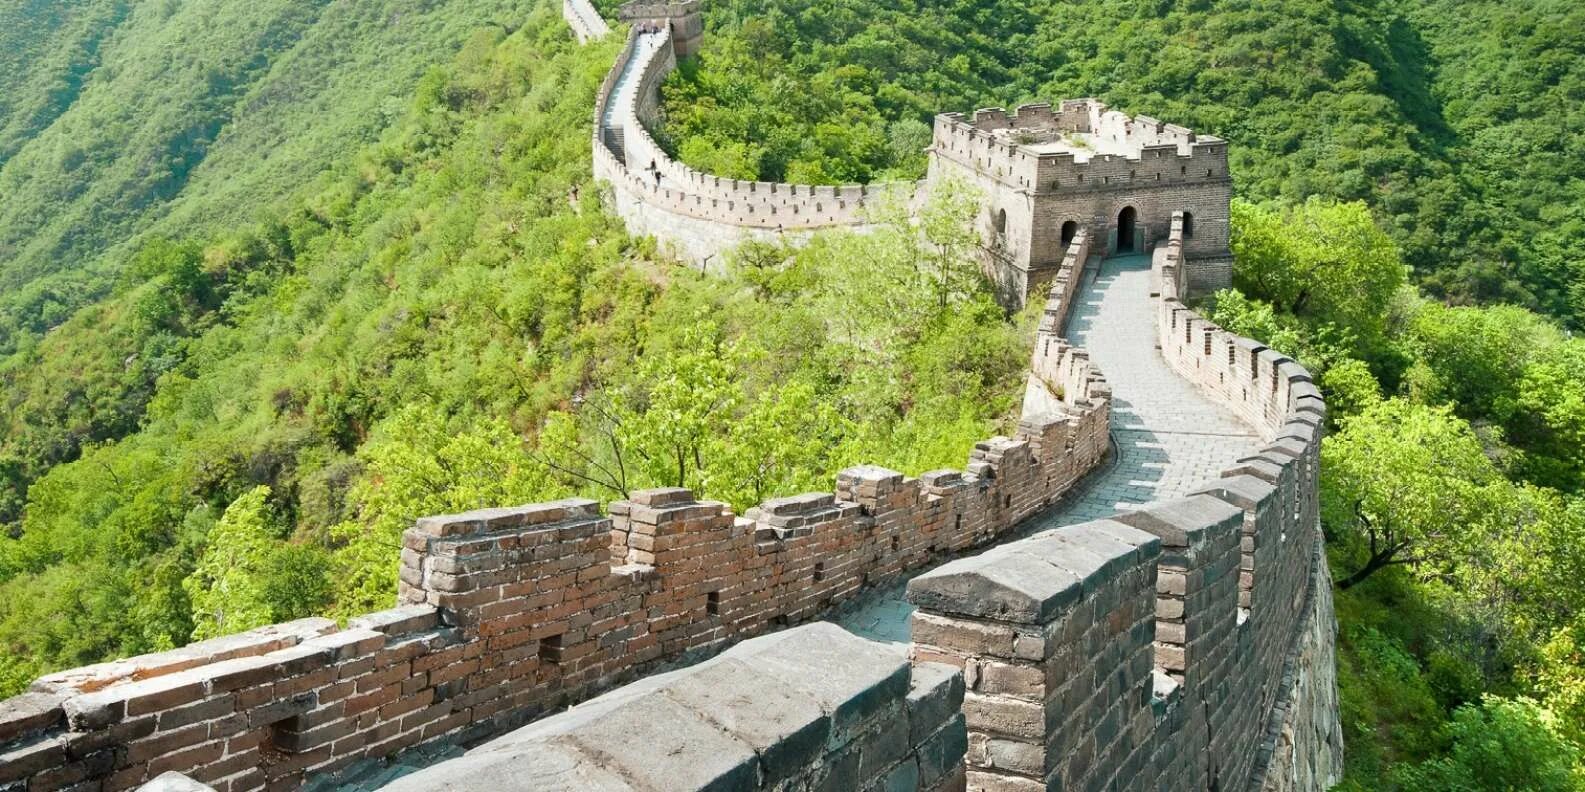 Мутяньюй Великая китайская стена. Пекин китайская стена. Участок Великой китайской стены Мутяньюй. Семь чудес света китайская стена.